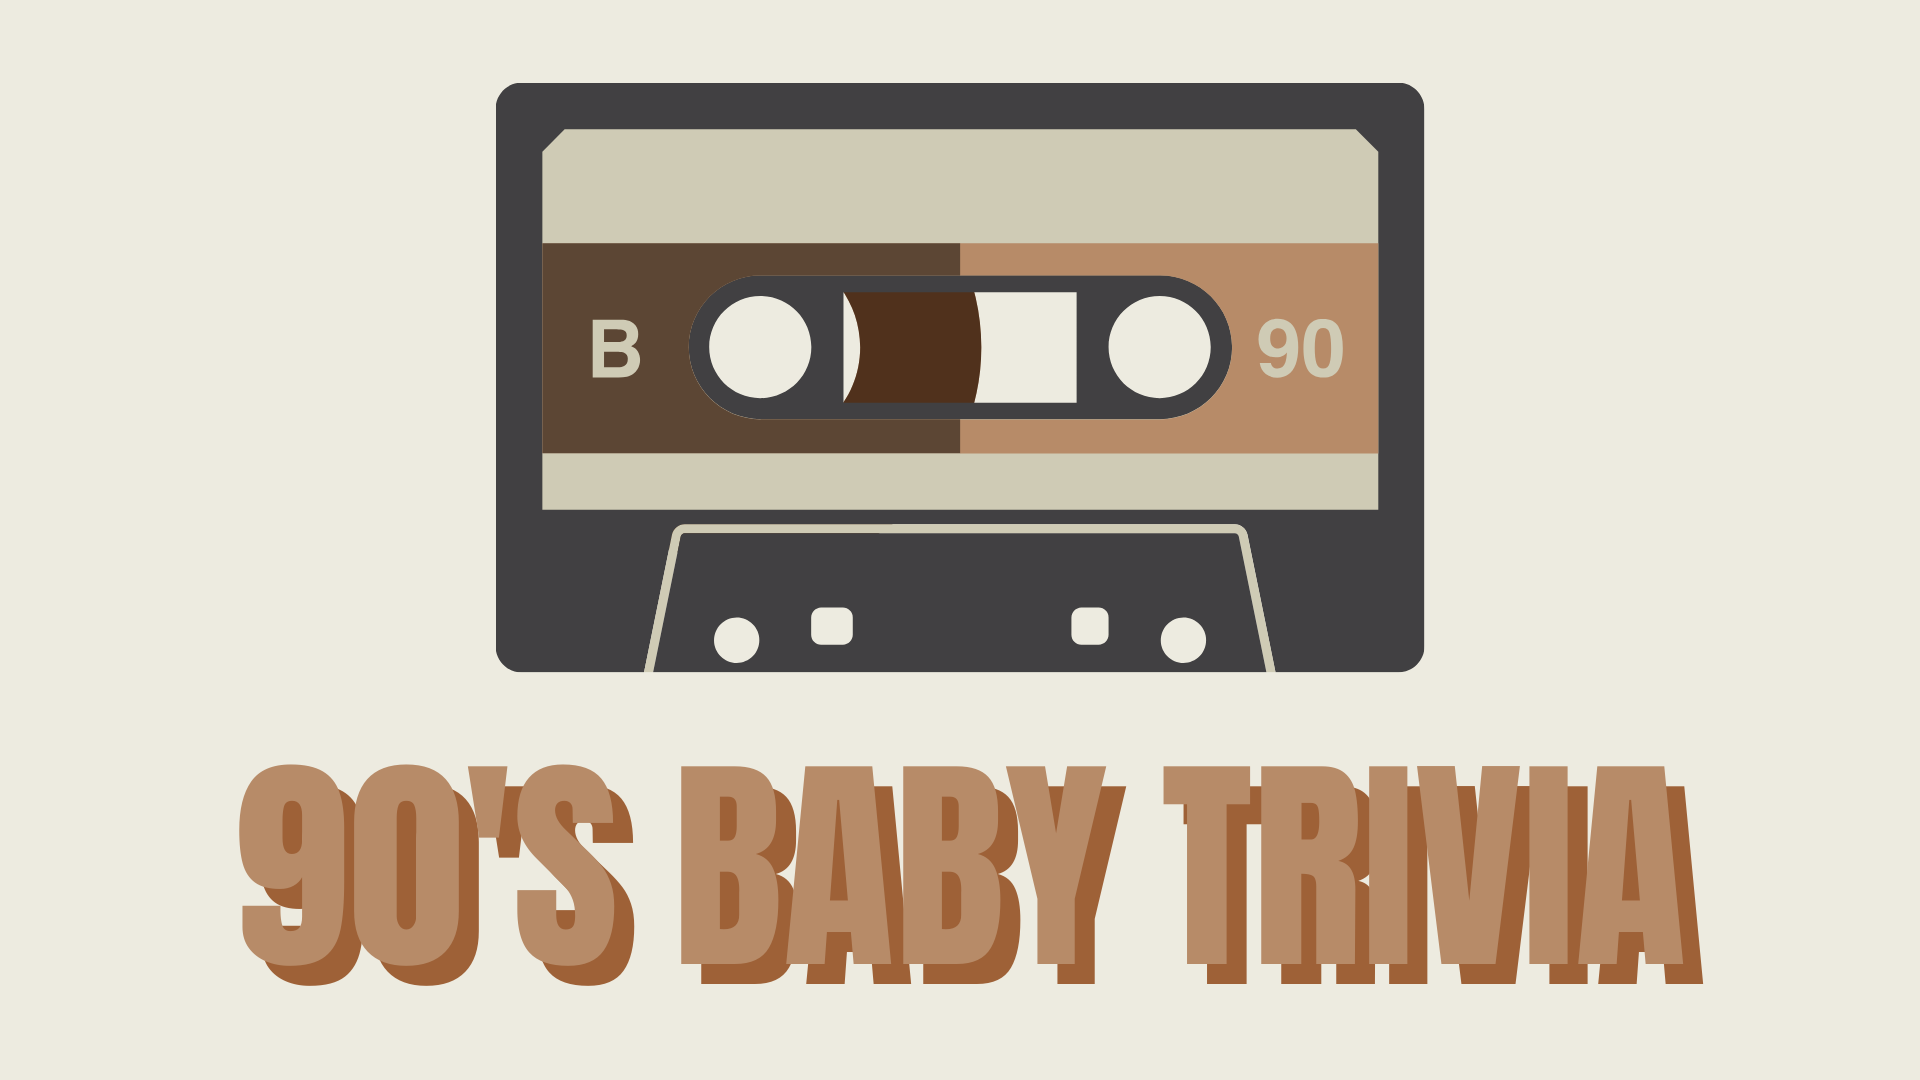 90s-baby-trivia